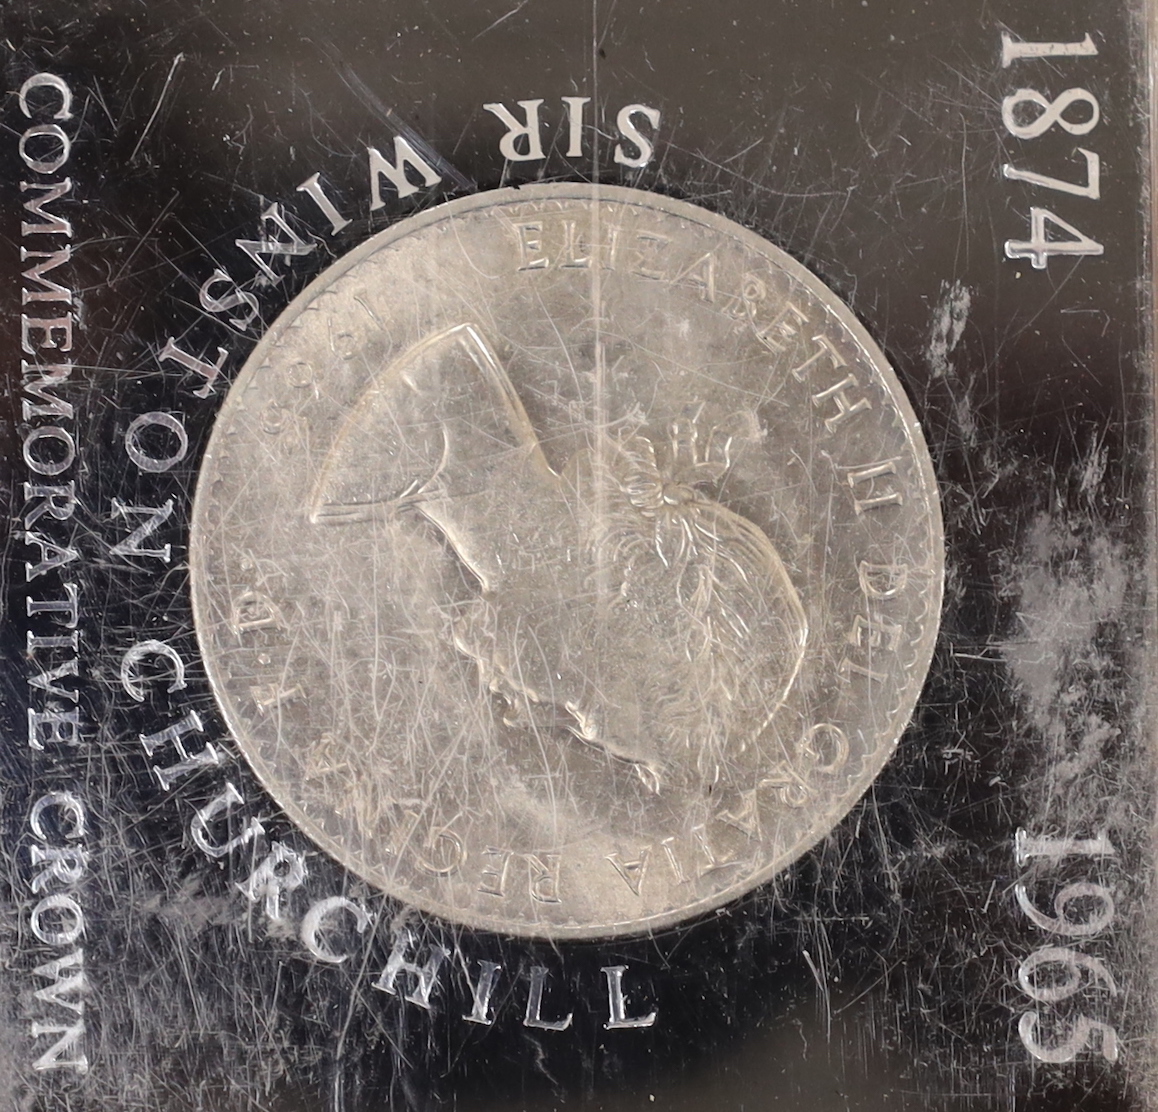 British coins, George VI to QEII including commemorative crowns, decimal coins sets, etc.